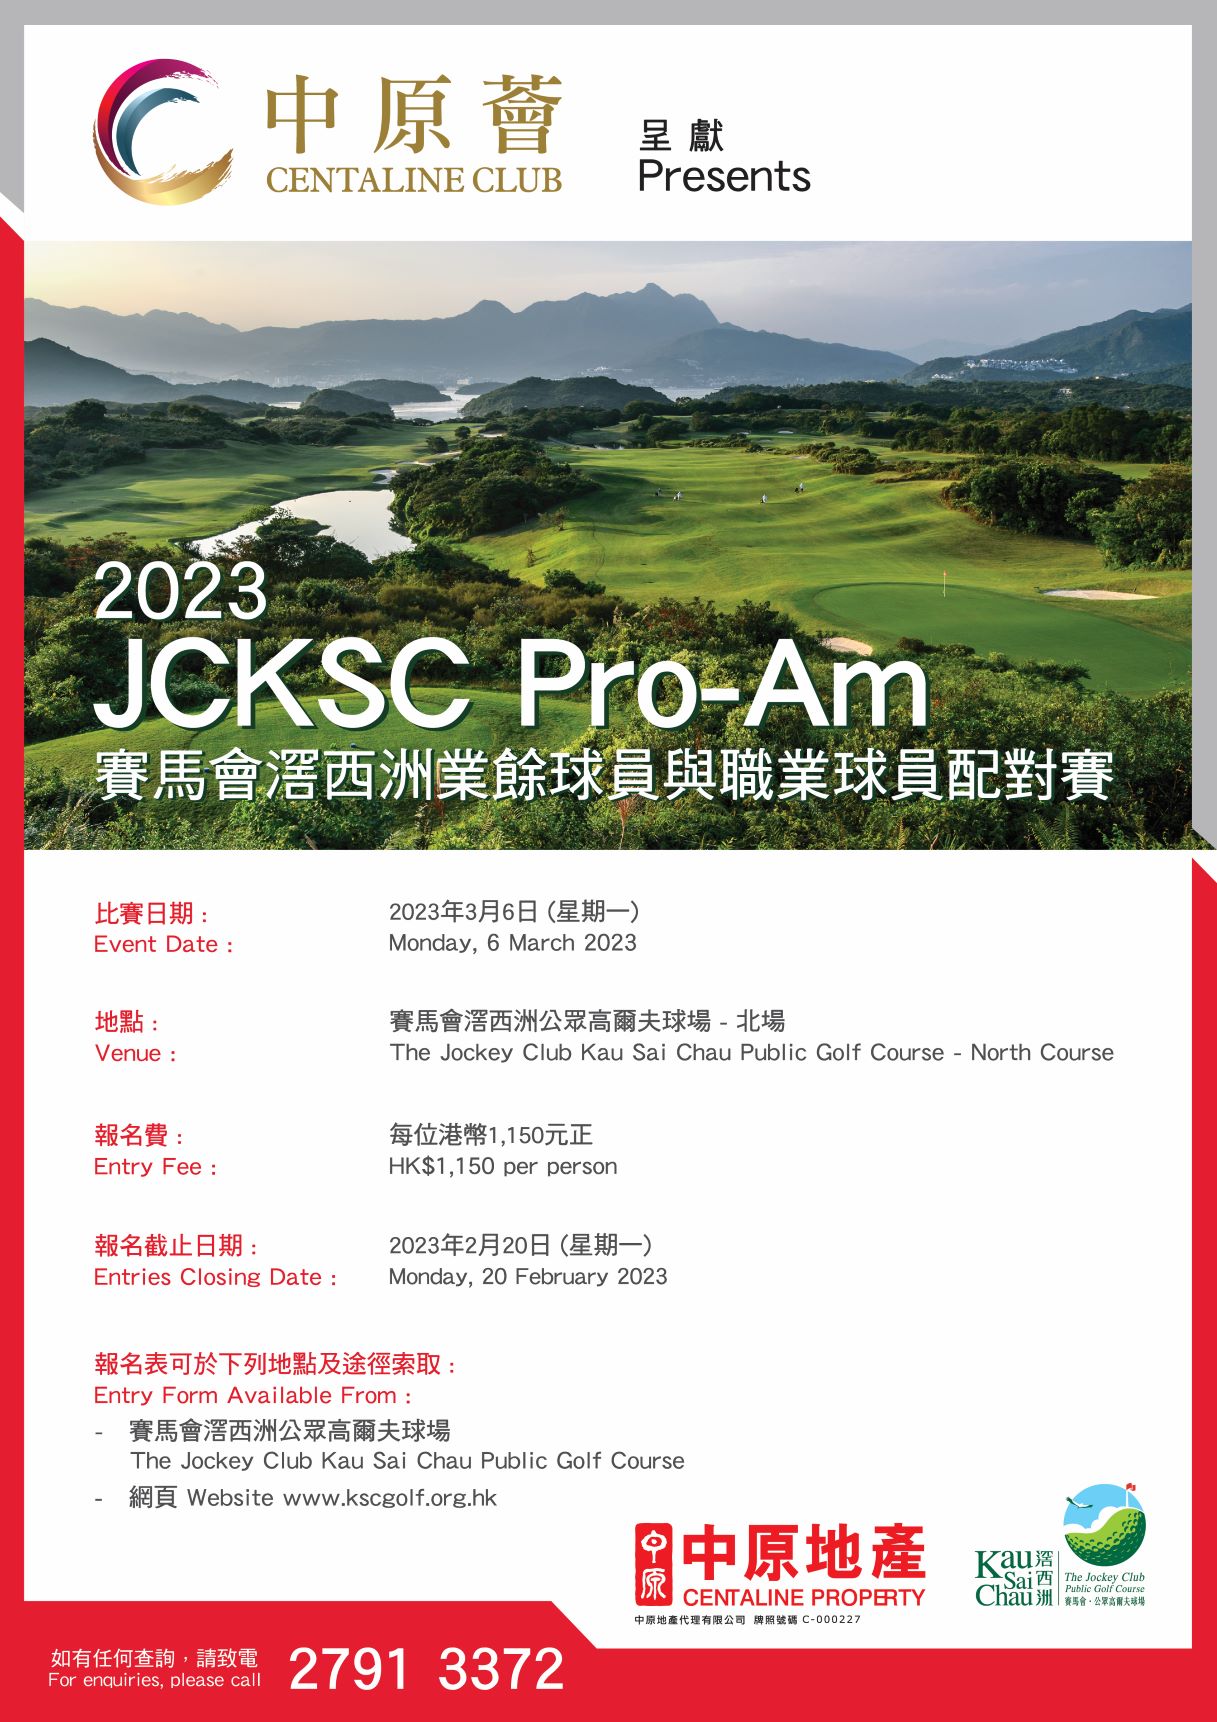 Centaline Club Presents  2023 JCKSC Pro-Am